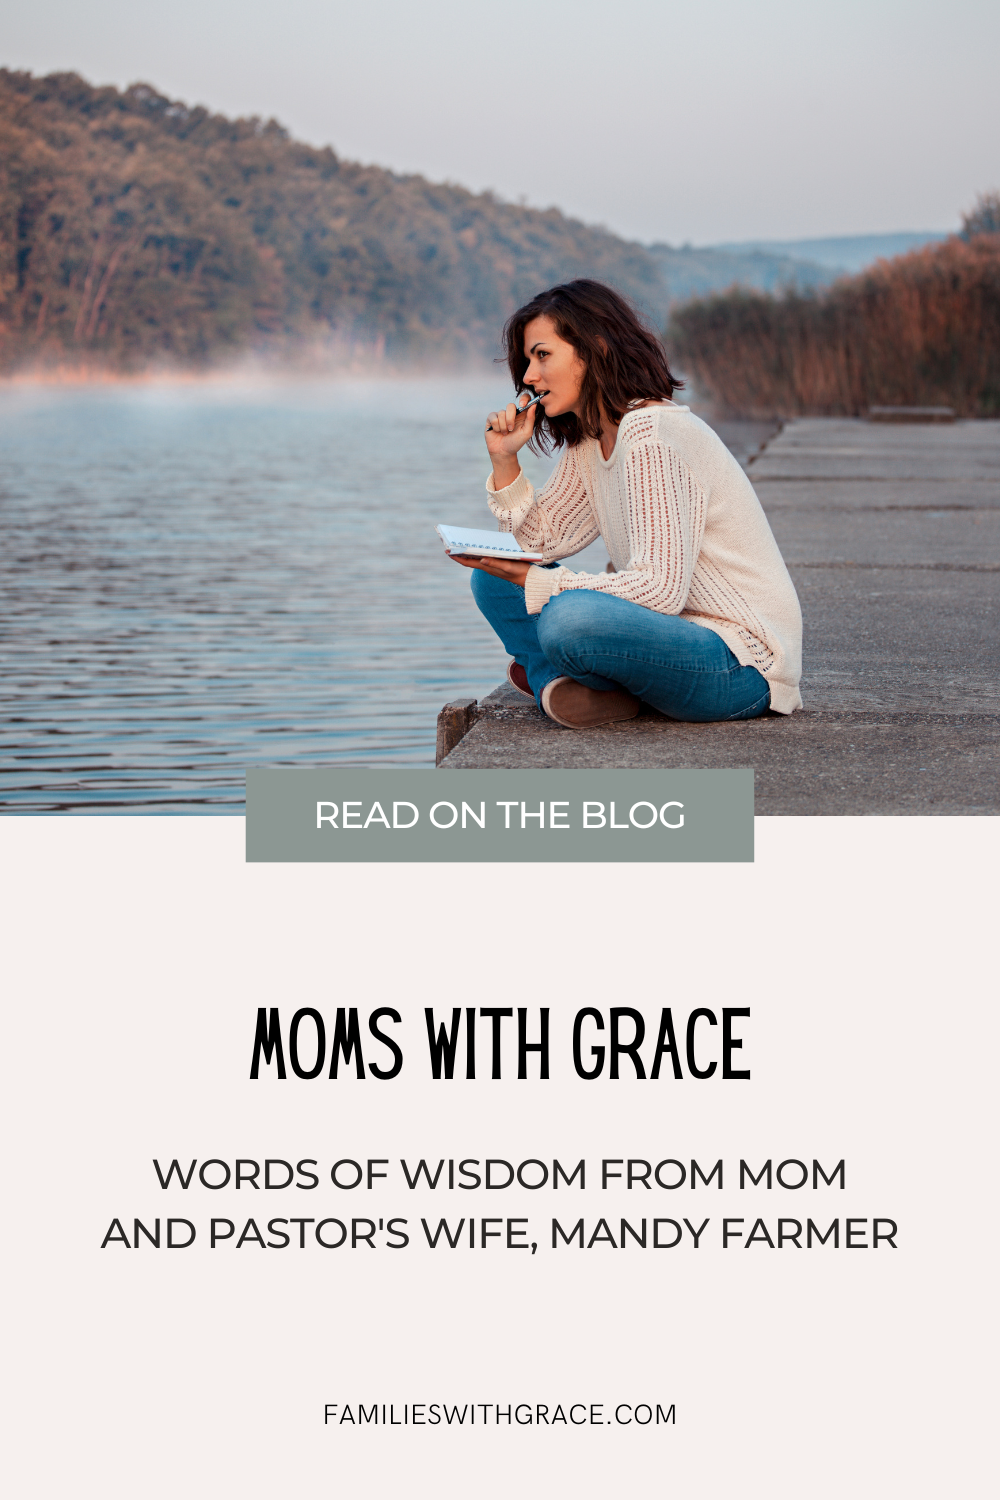 Moms with Grace: Mandy Farmer